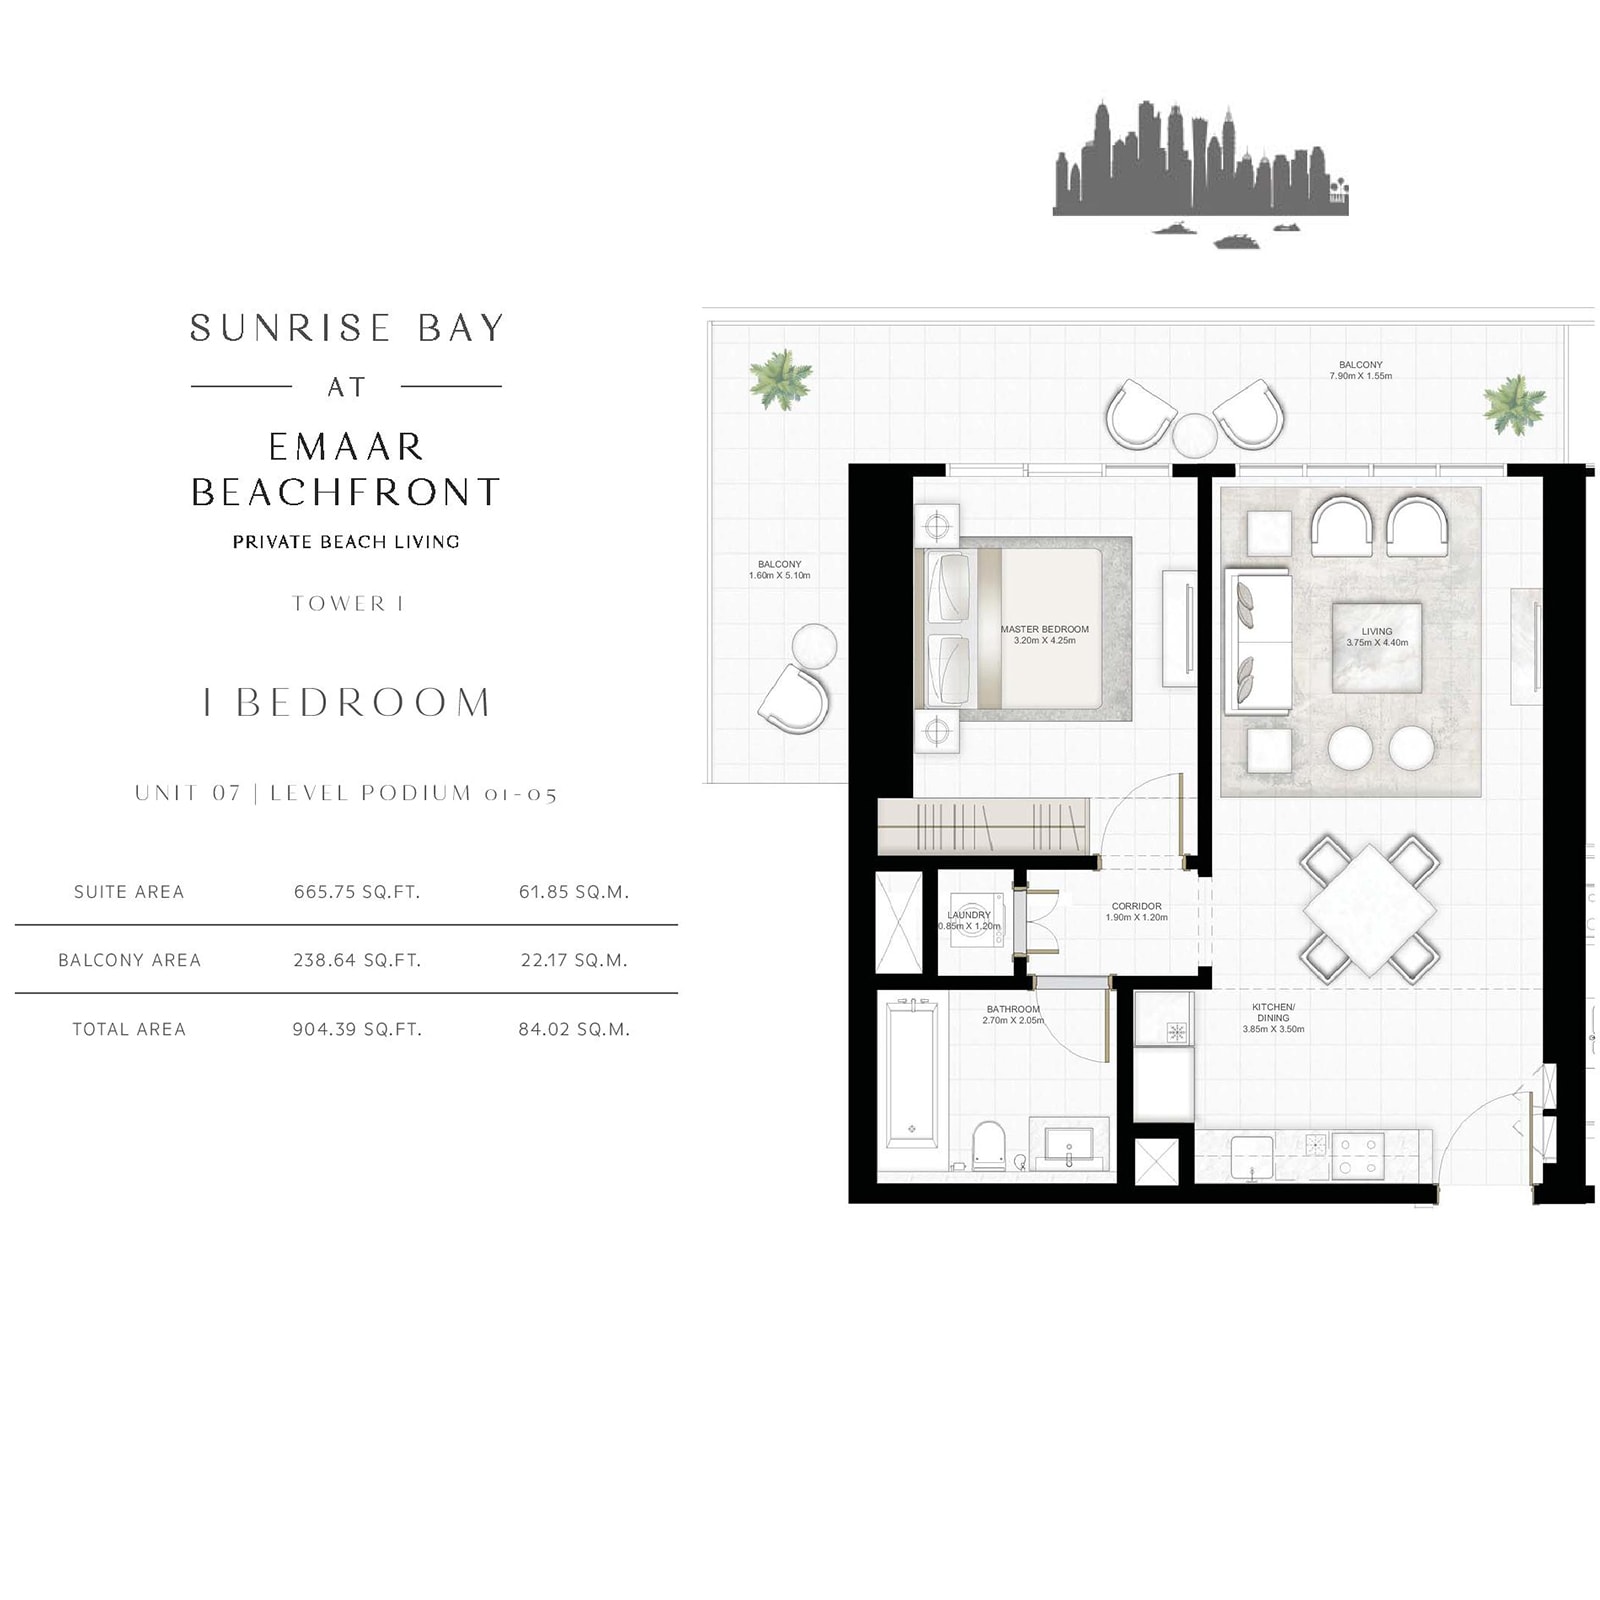 emaar Sunrise Bay apartments price dubai